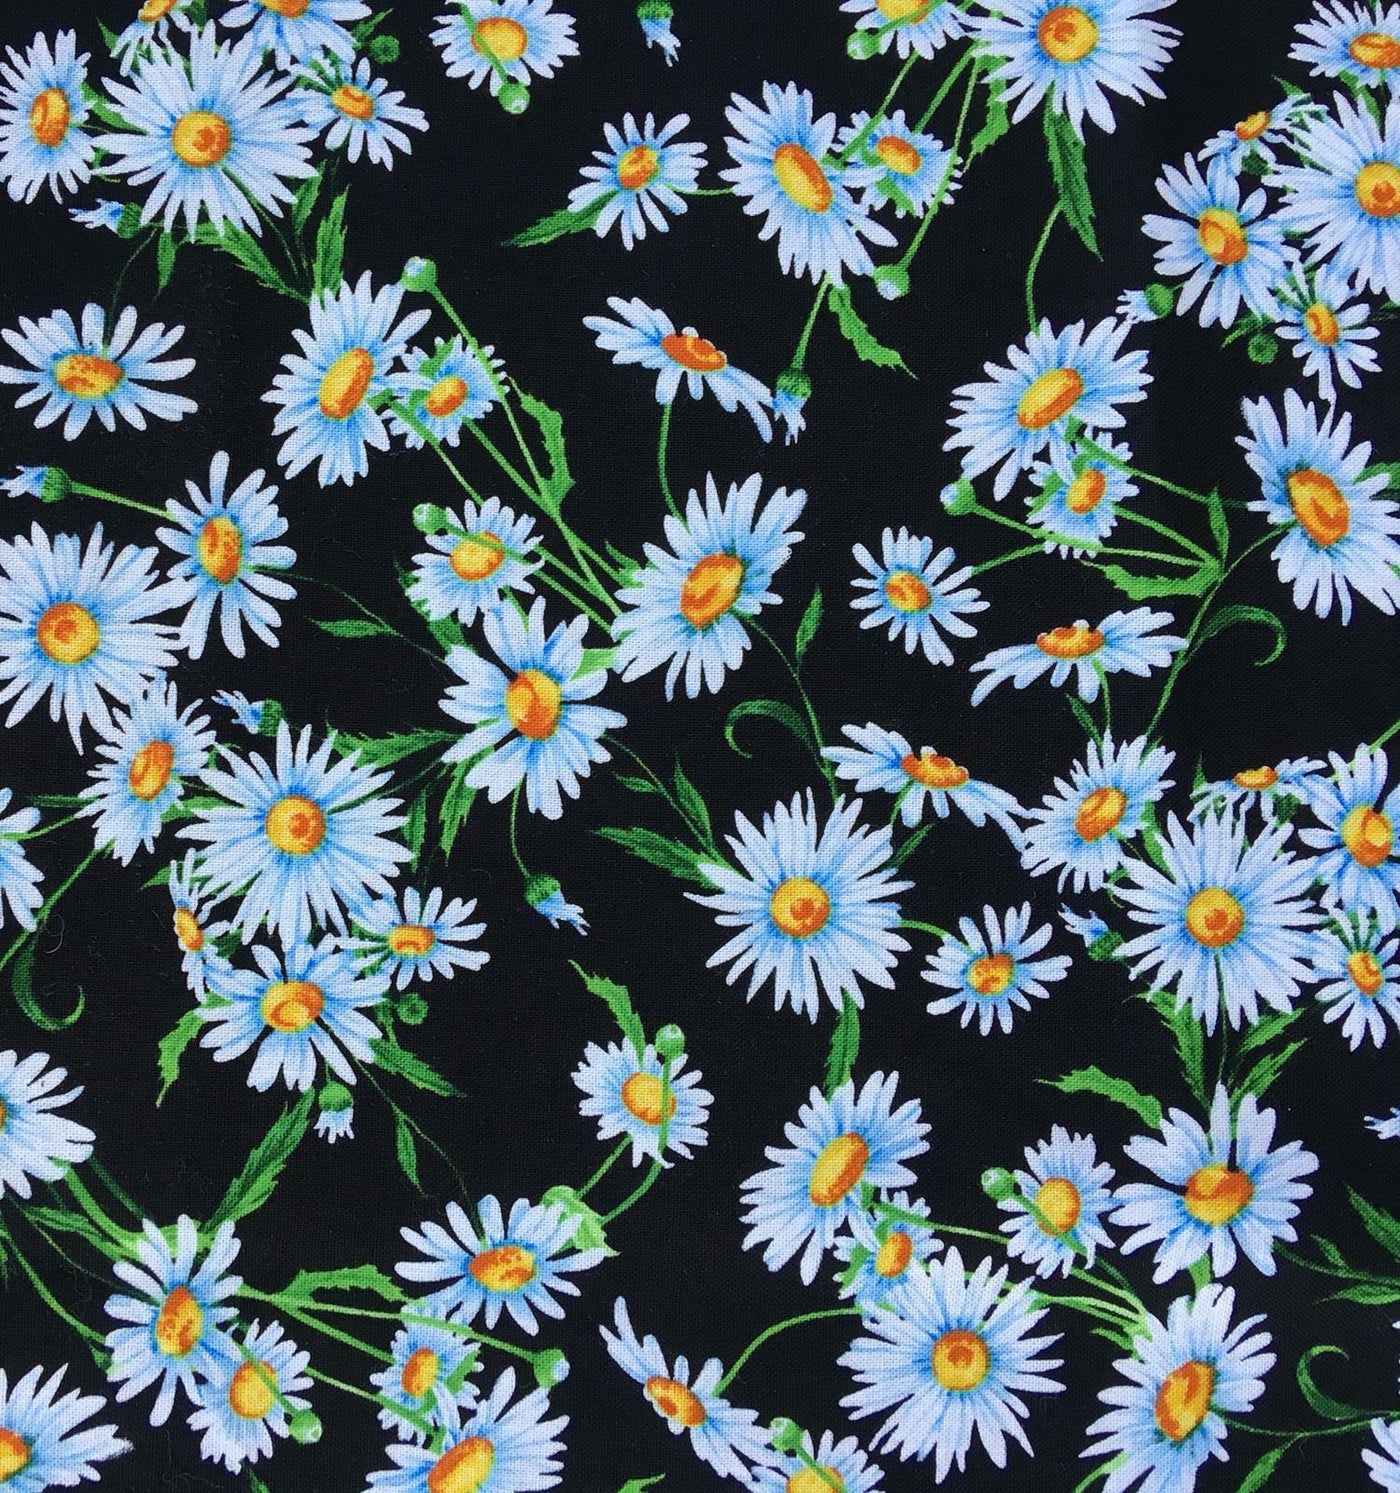 Daisy Flower Bunch Bandana - Timeless Treasures - 100% Cotton